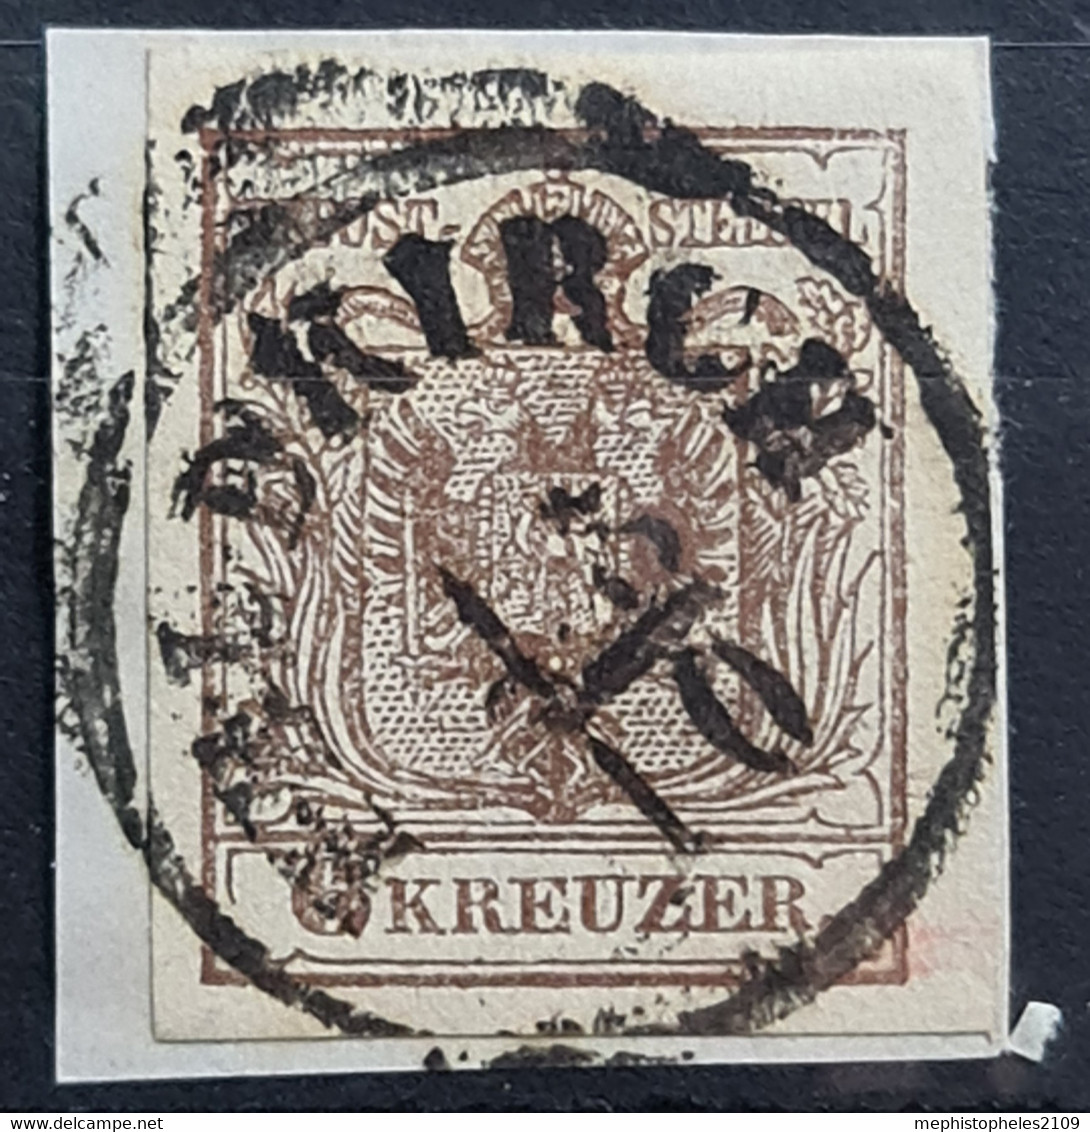 AUSTRIA 1850/54 - Canceled - ANK 4 - 6kr - Gebraucht